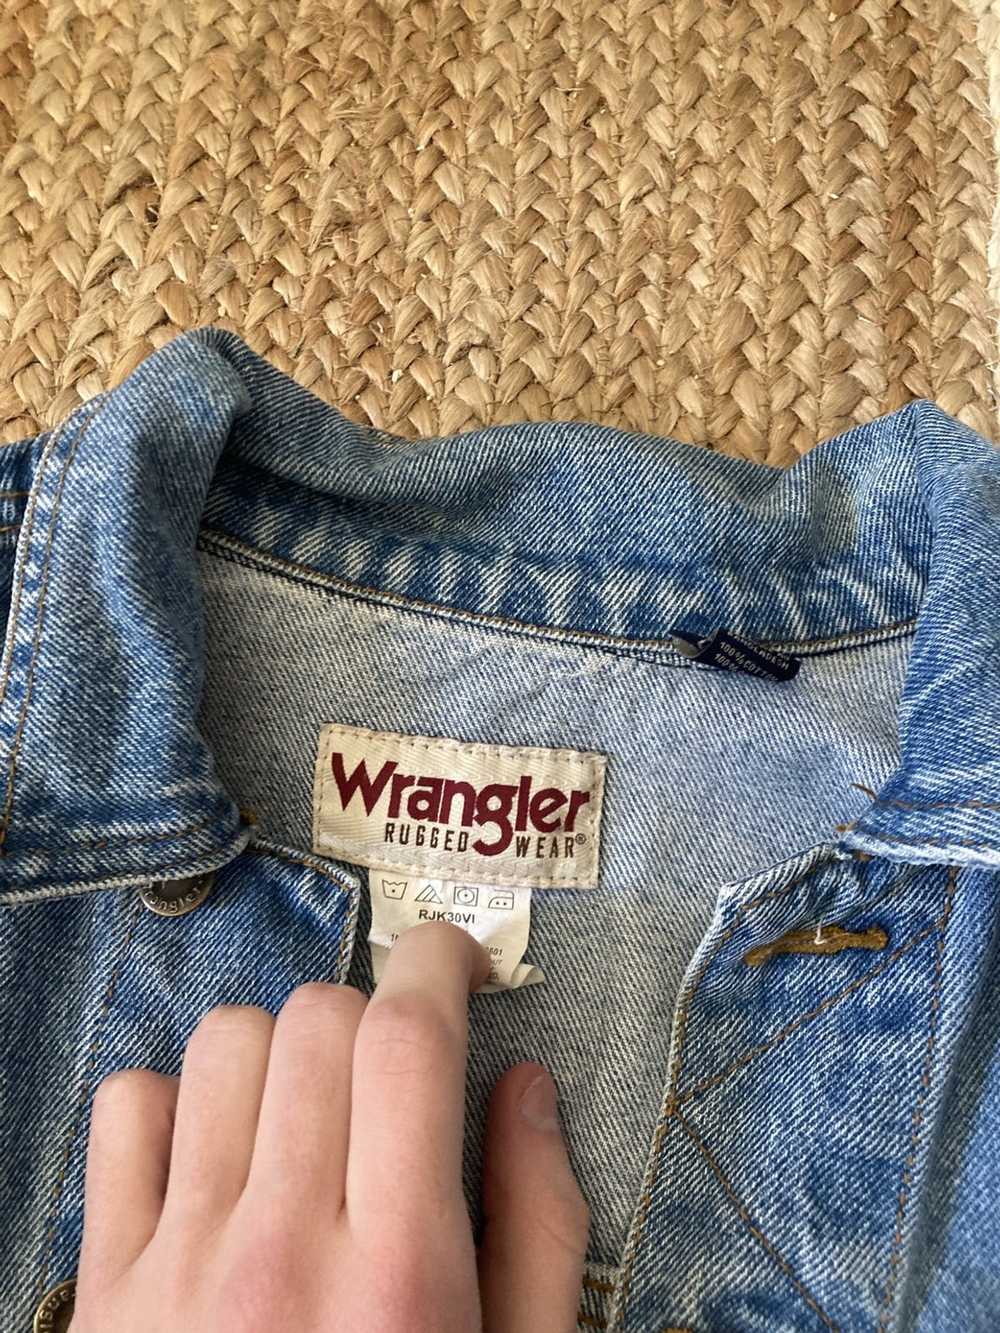 Wrangler Wrangler Rugged Wear Denim Jacket - image 4